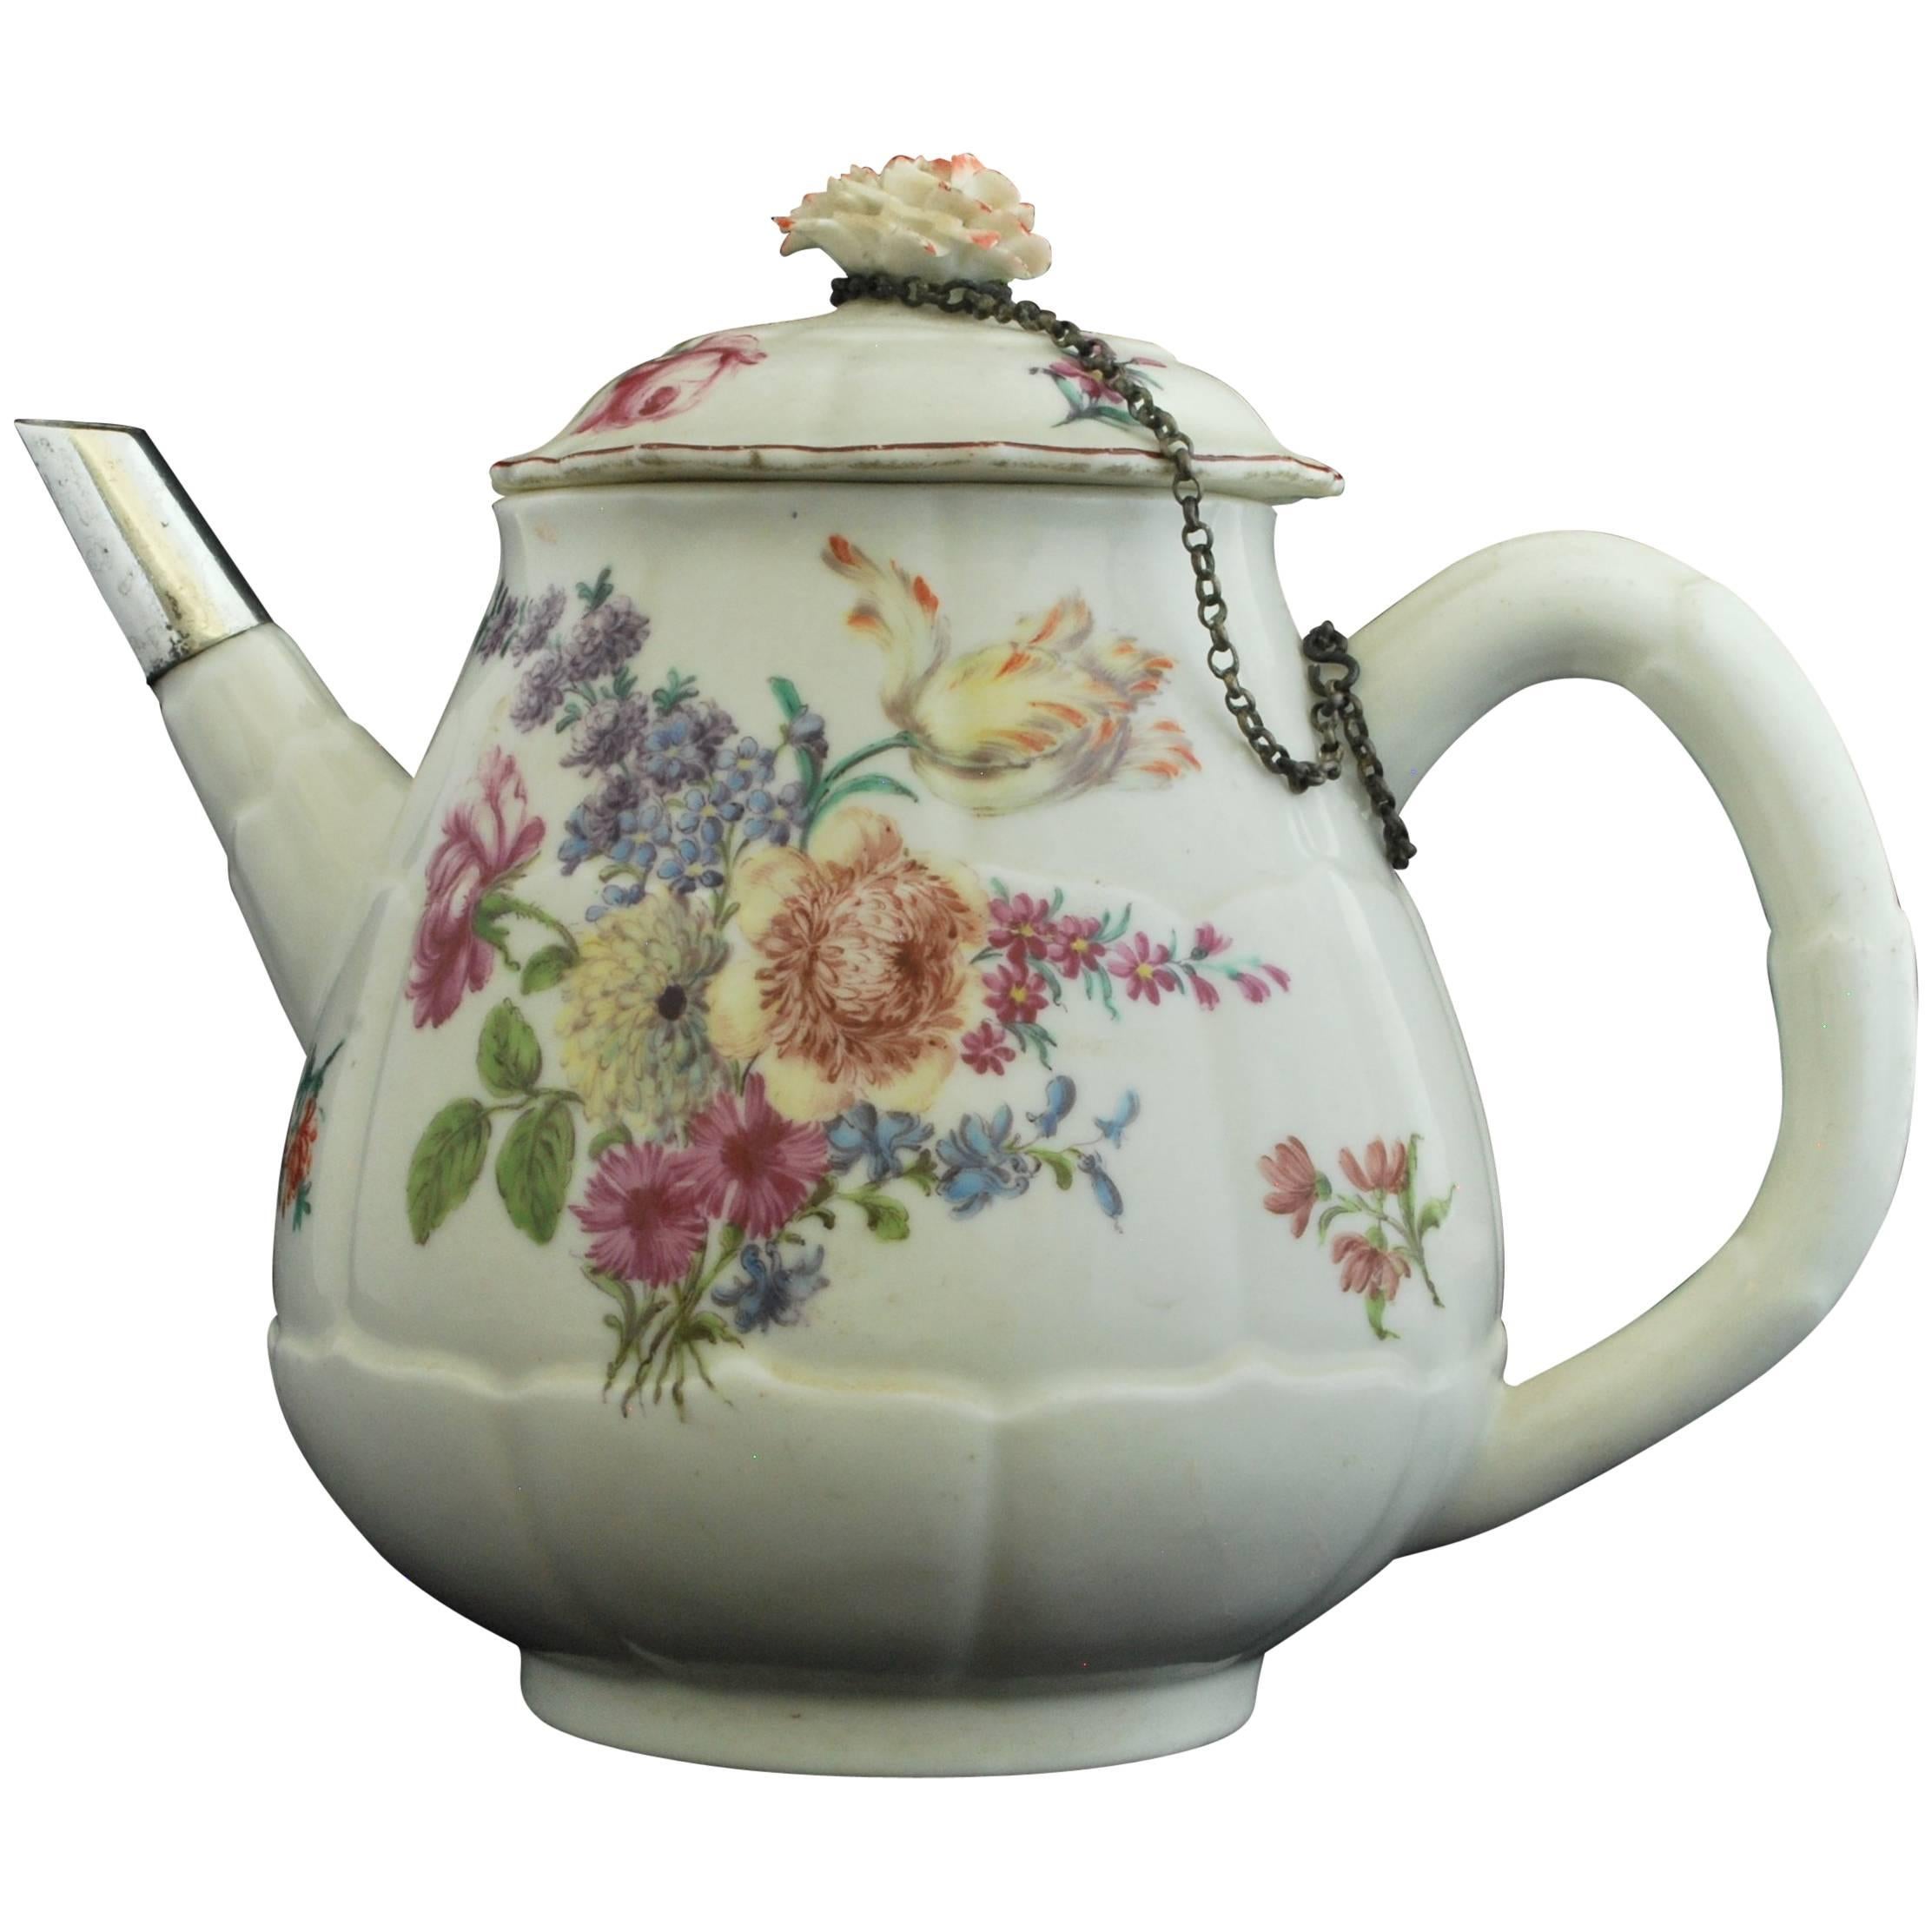 Teapot in Artichoke Shape, Chelsea, circa 1755